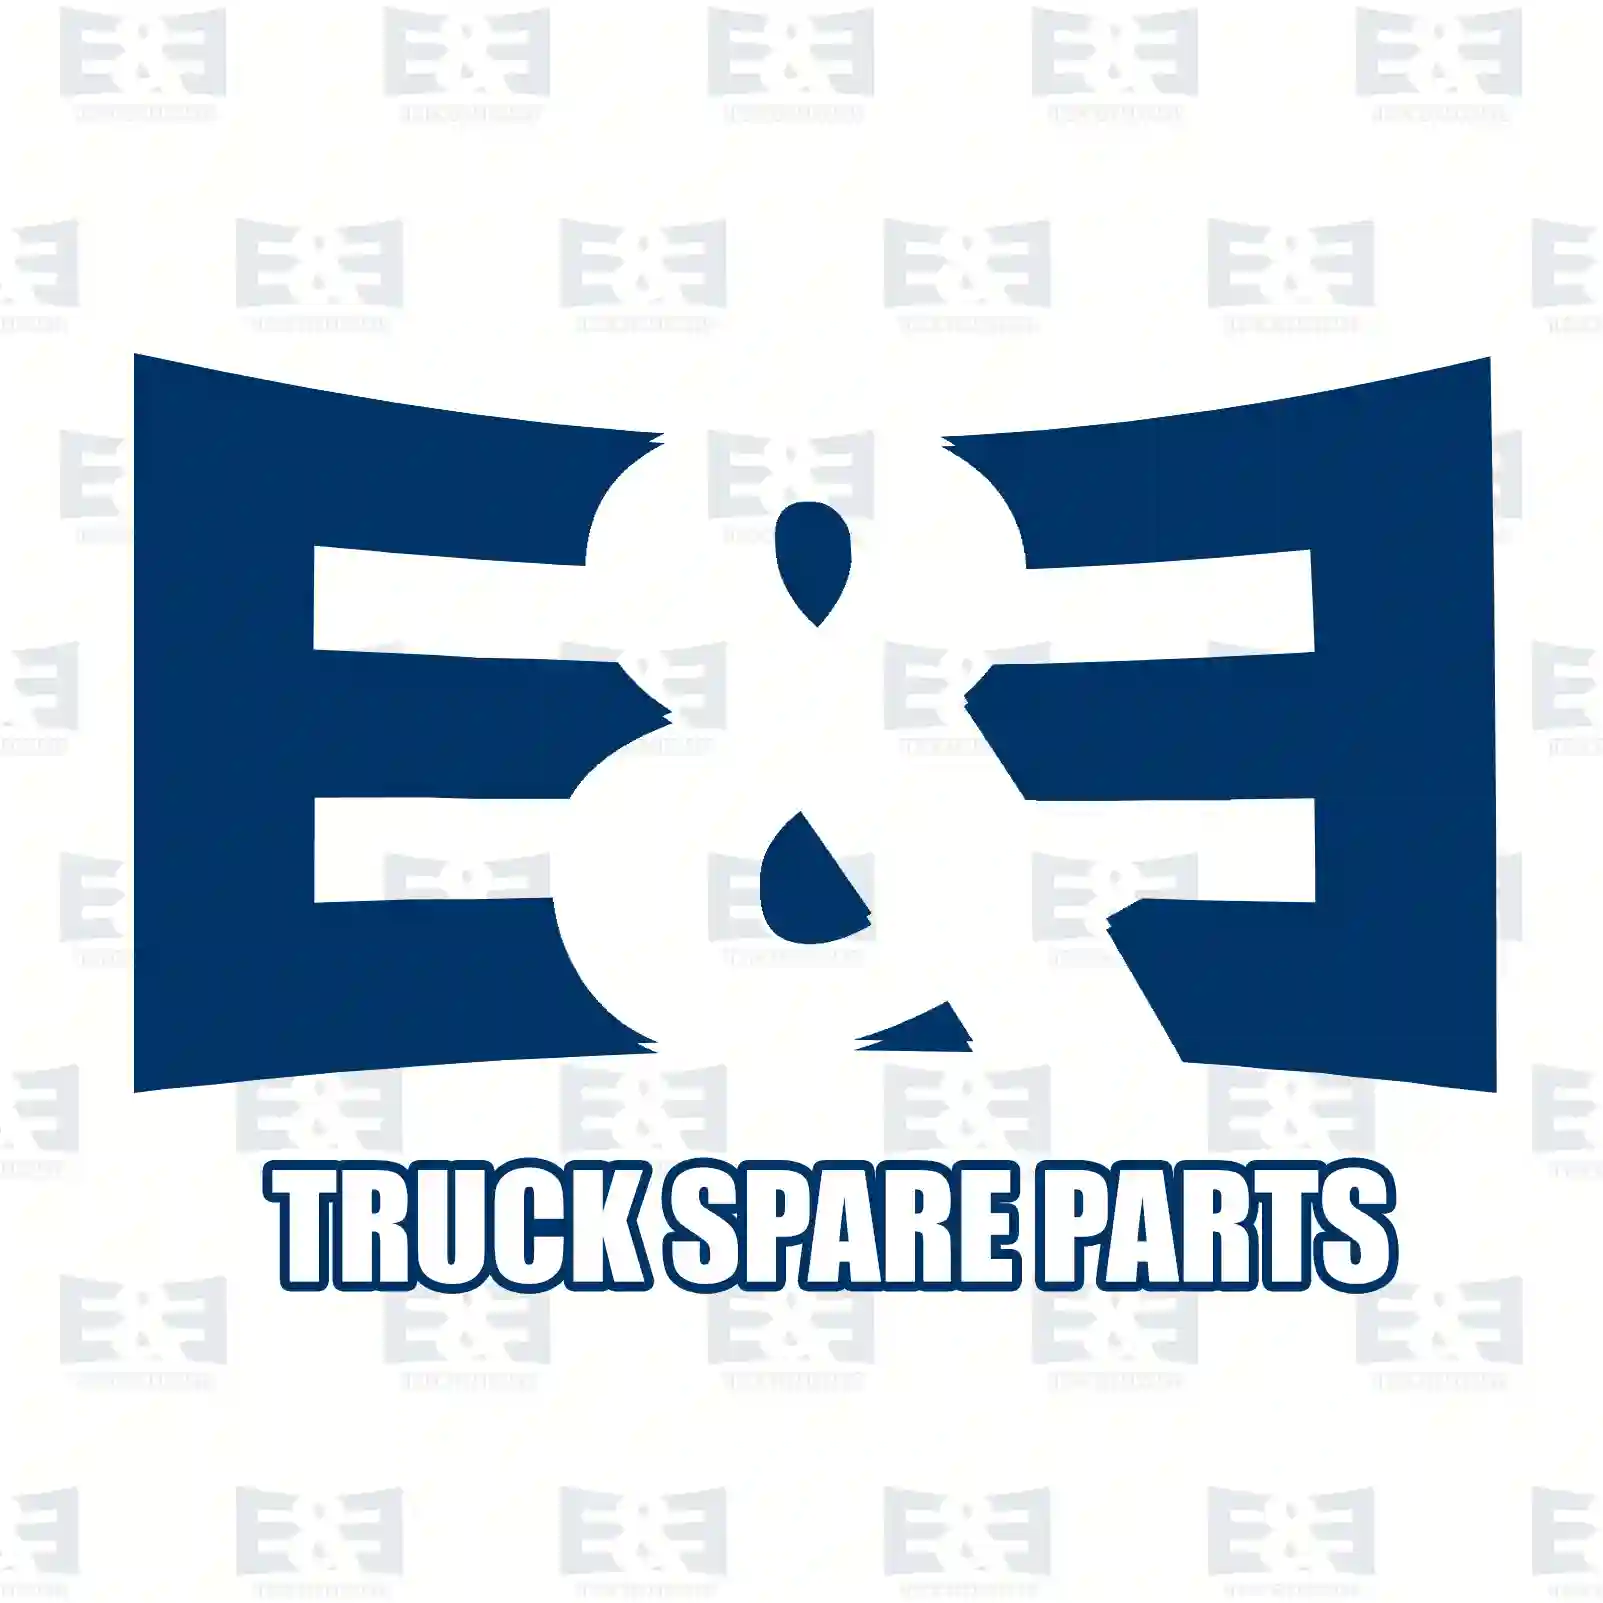 Brake caliper, reman. / without old core, 2E2296087, 10571162, 10571799, 1395178, 1422035, 1480810, 1513592, 1571162, 1731228, 1756394, 1921150, 2395623, 571162, 571799 ||  2E2296087 E&E Truck Spare Parts | Truck Spare Parts, Auotomotive Spare Parts Brake caliper, reman. / without old core, 2E2296087, 10571162, 10571799, 1395178, 1422035, 1480810, 1513592, 1571162, 1731228, 1756394, 1921150, 2395623, 571162, 571799 ||  2E2296087 E&E Truck Spare Parts | Truck Spare Parts, Auotomotive Spare Parts